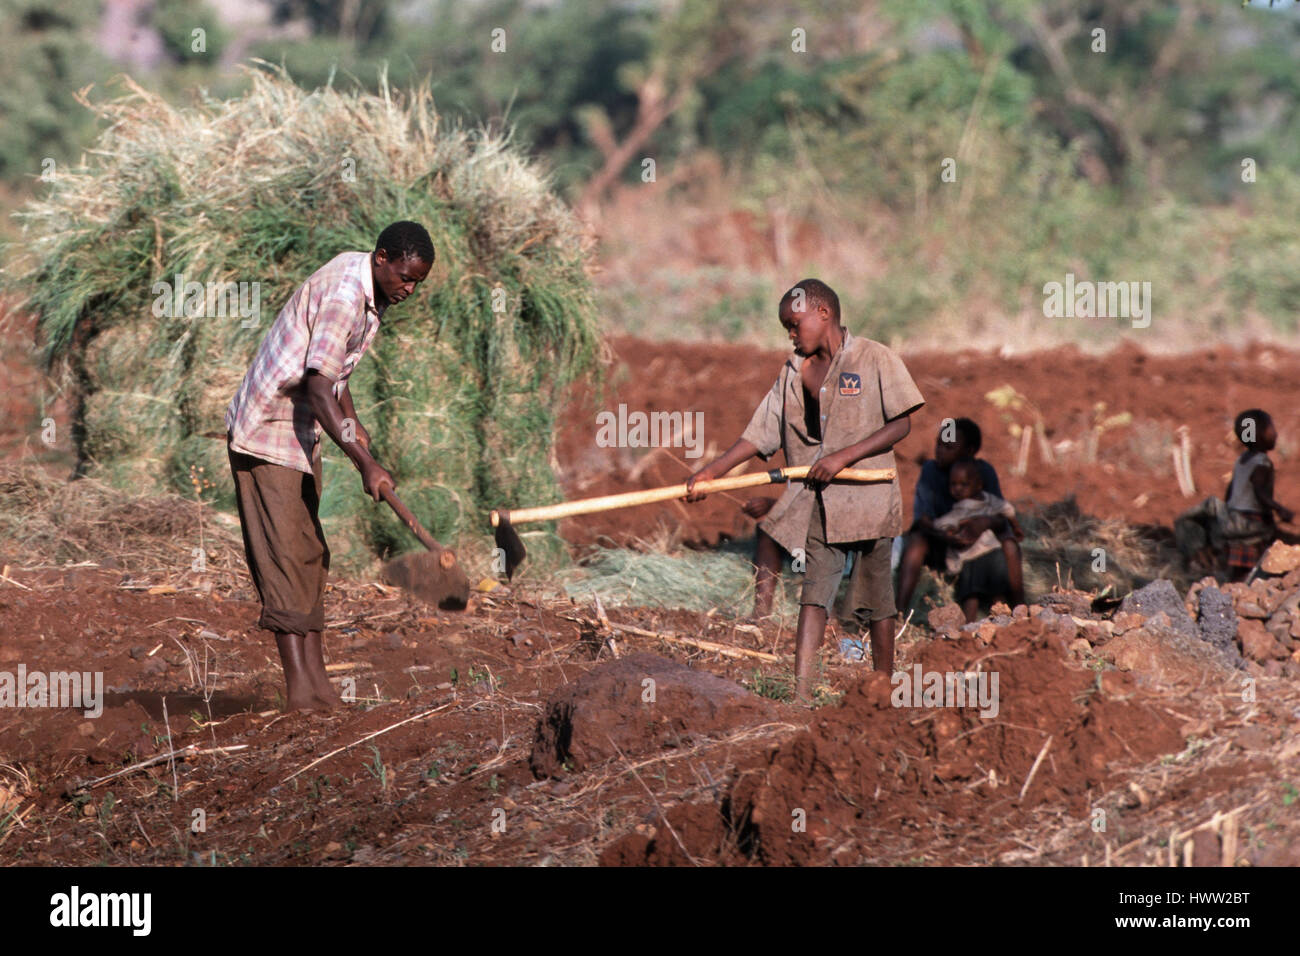 Vater und Sohn ein Feld hacken, Mais, Moshi, Tansania Kilimanjaro-Region zu Pflanzen Stockfoto